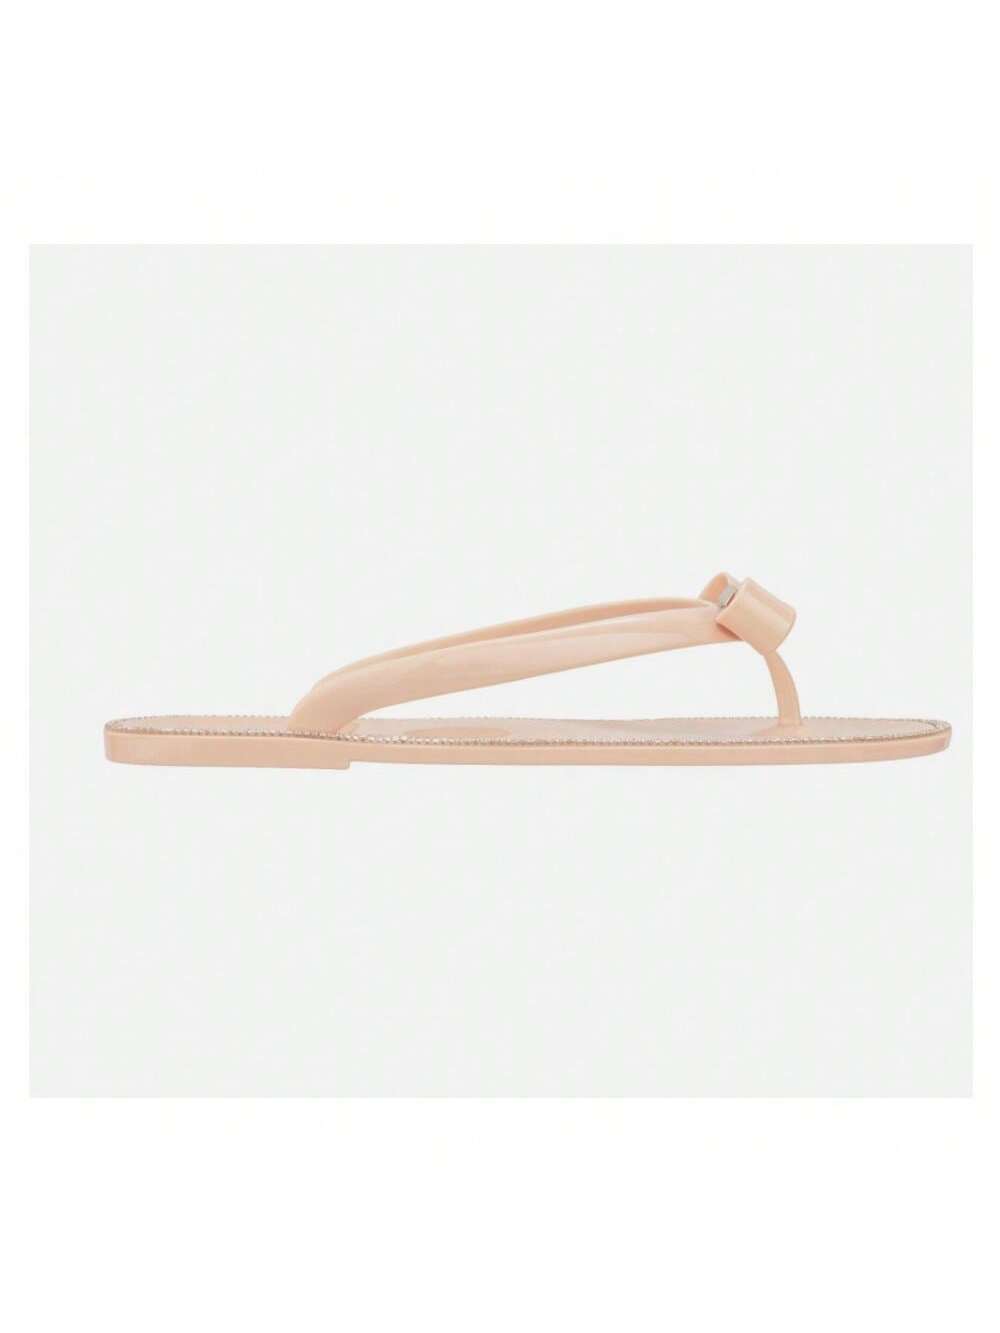 Women's Jelly Sandals Rhinestone Flip Flops Slide Flat Sandals-Apricot-2